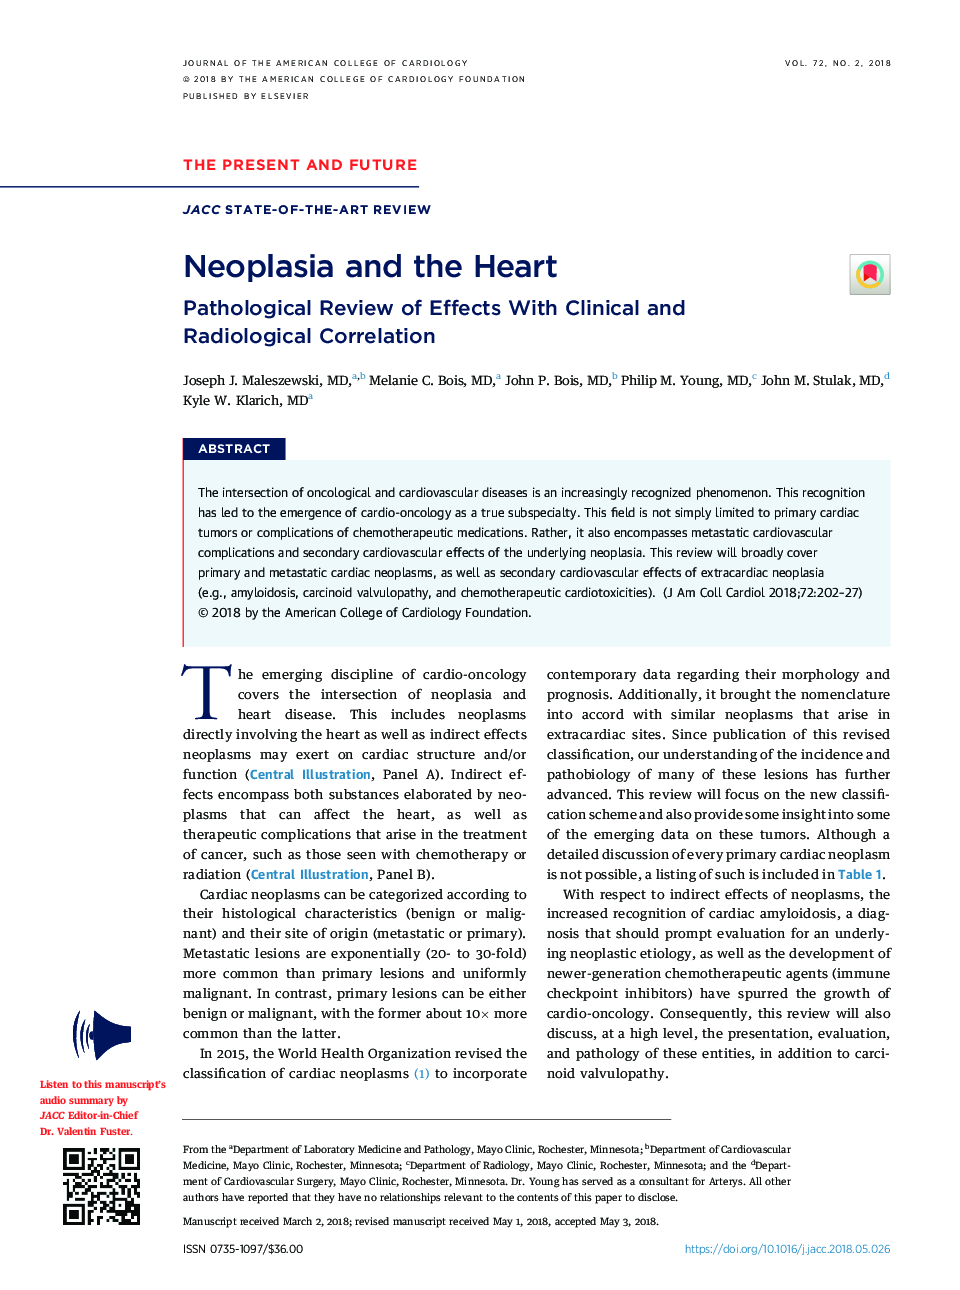 نئوپلازی و قلب 